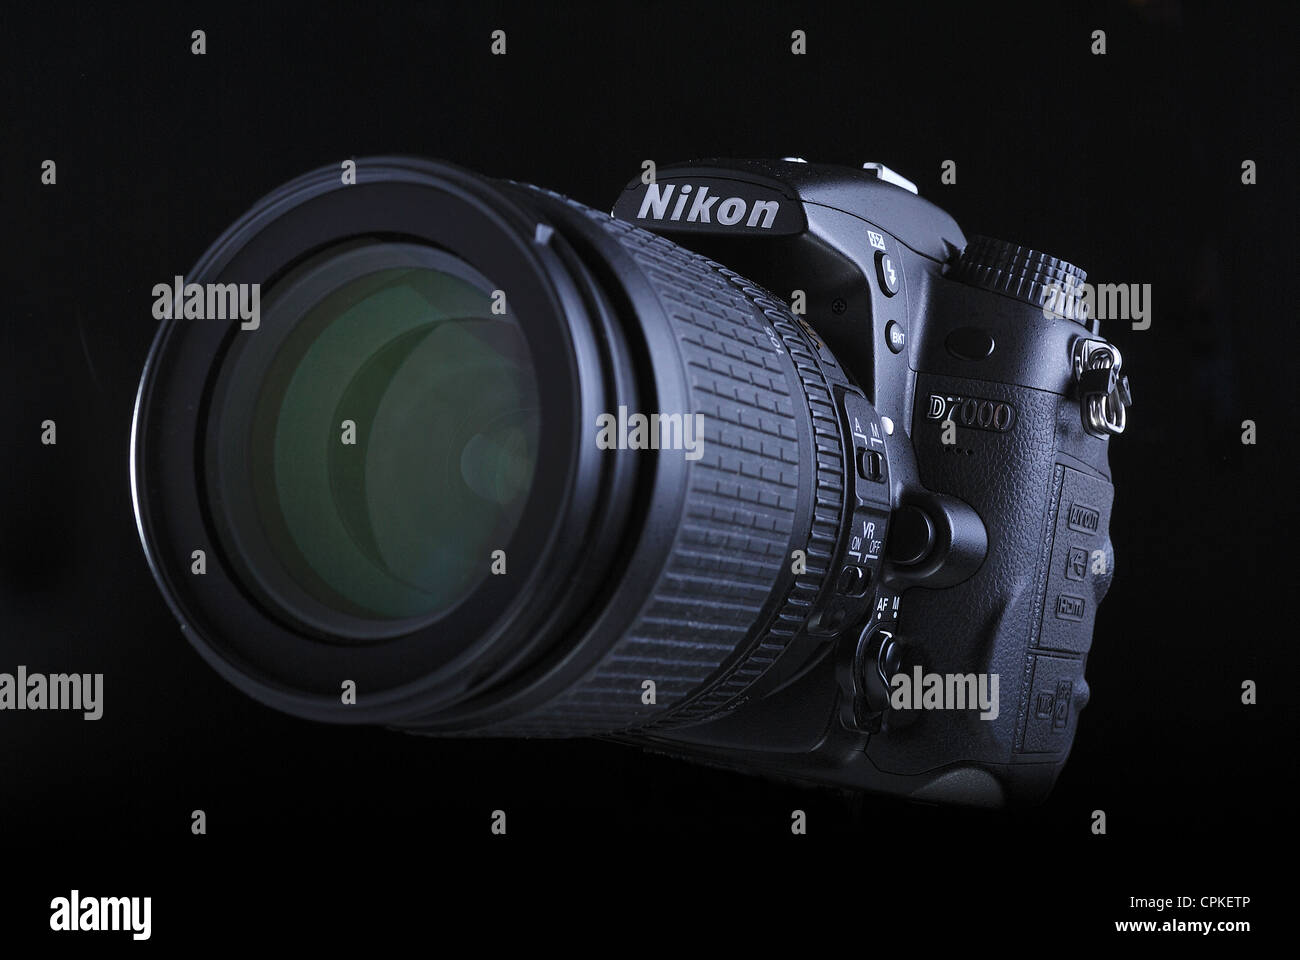 Fotocamera digitale reflex Nikon D7000 Foto Stock